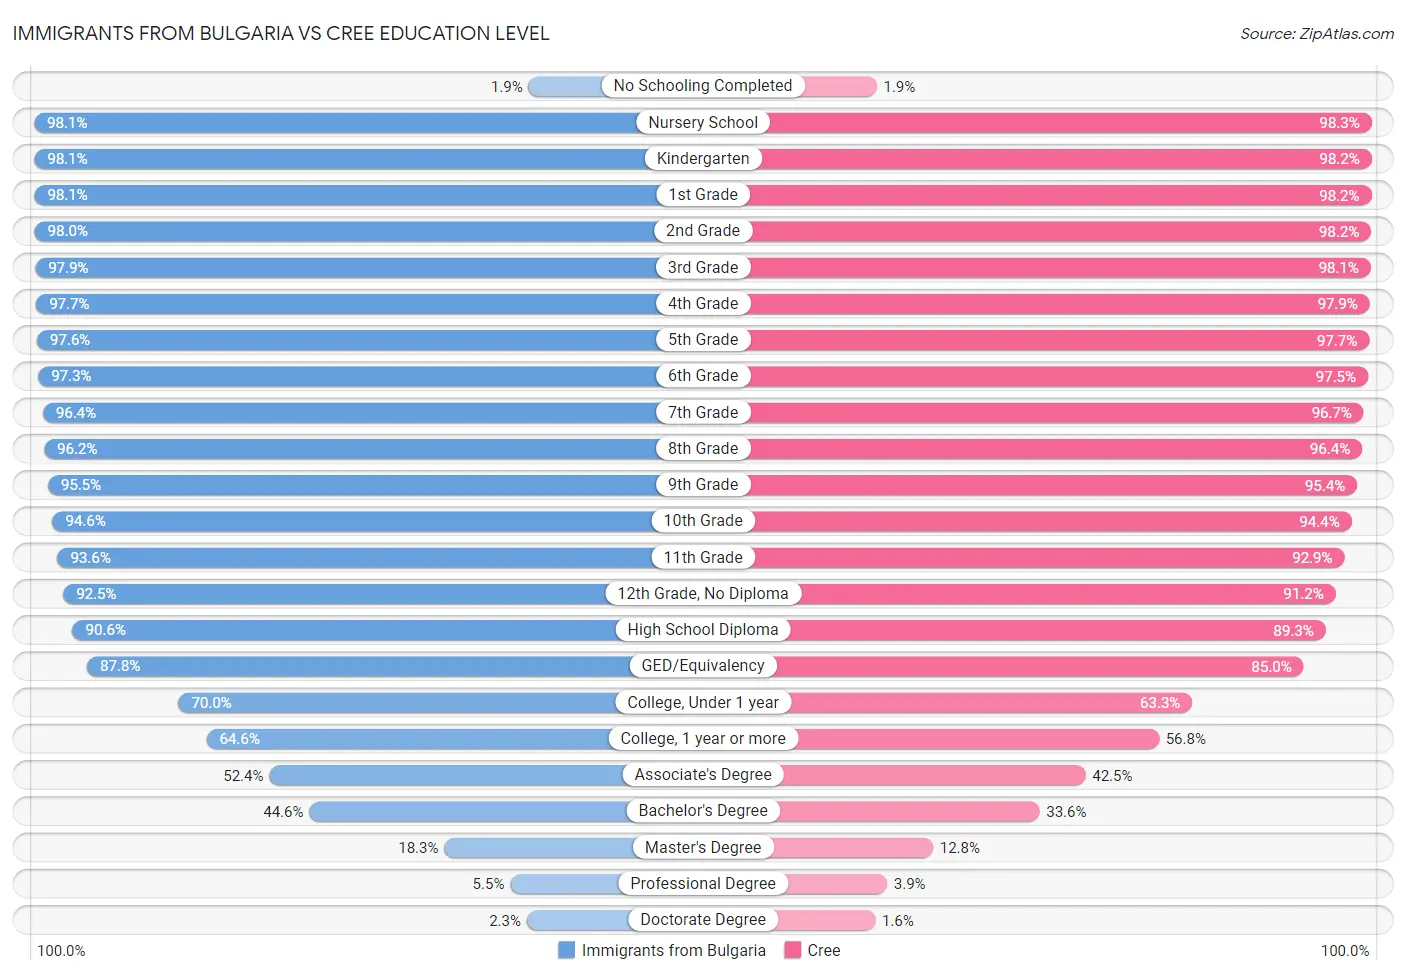 Immigrants from Bulgaria vs Cree Education Level